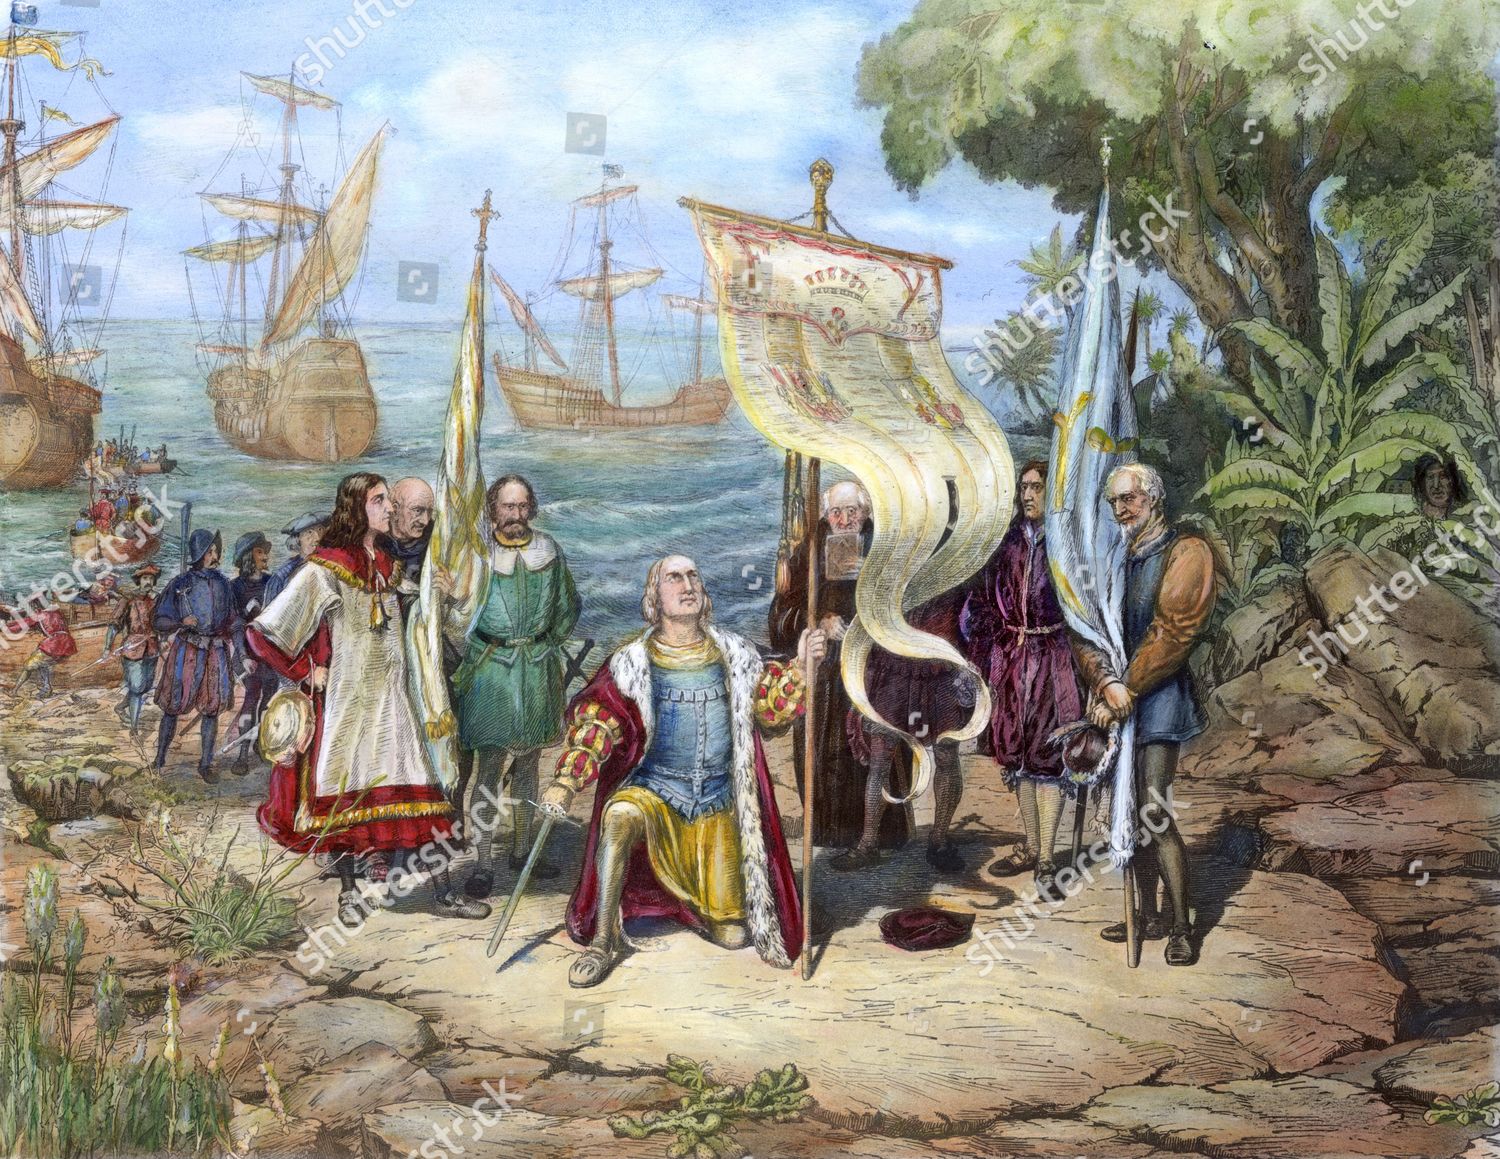 Бесплатная игра колумба. Экспедиция Христофора Колумба достигла острова Сан-Сальвадор.